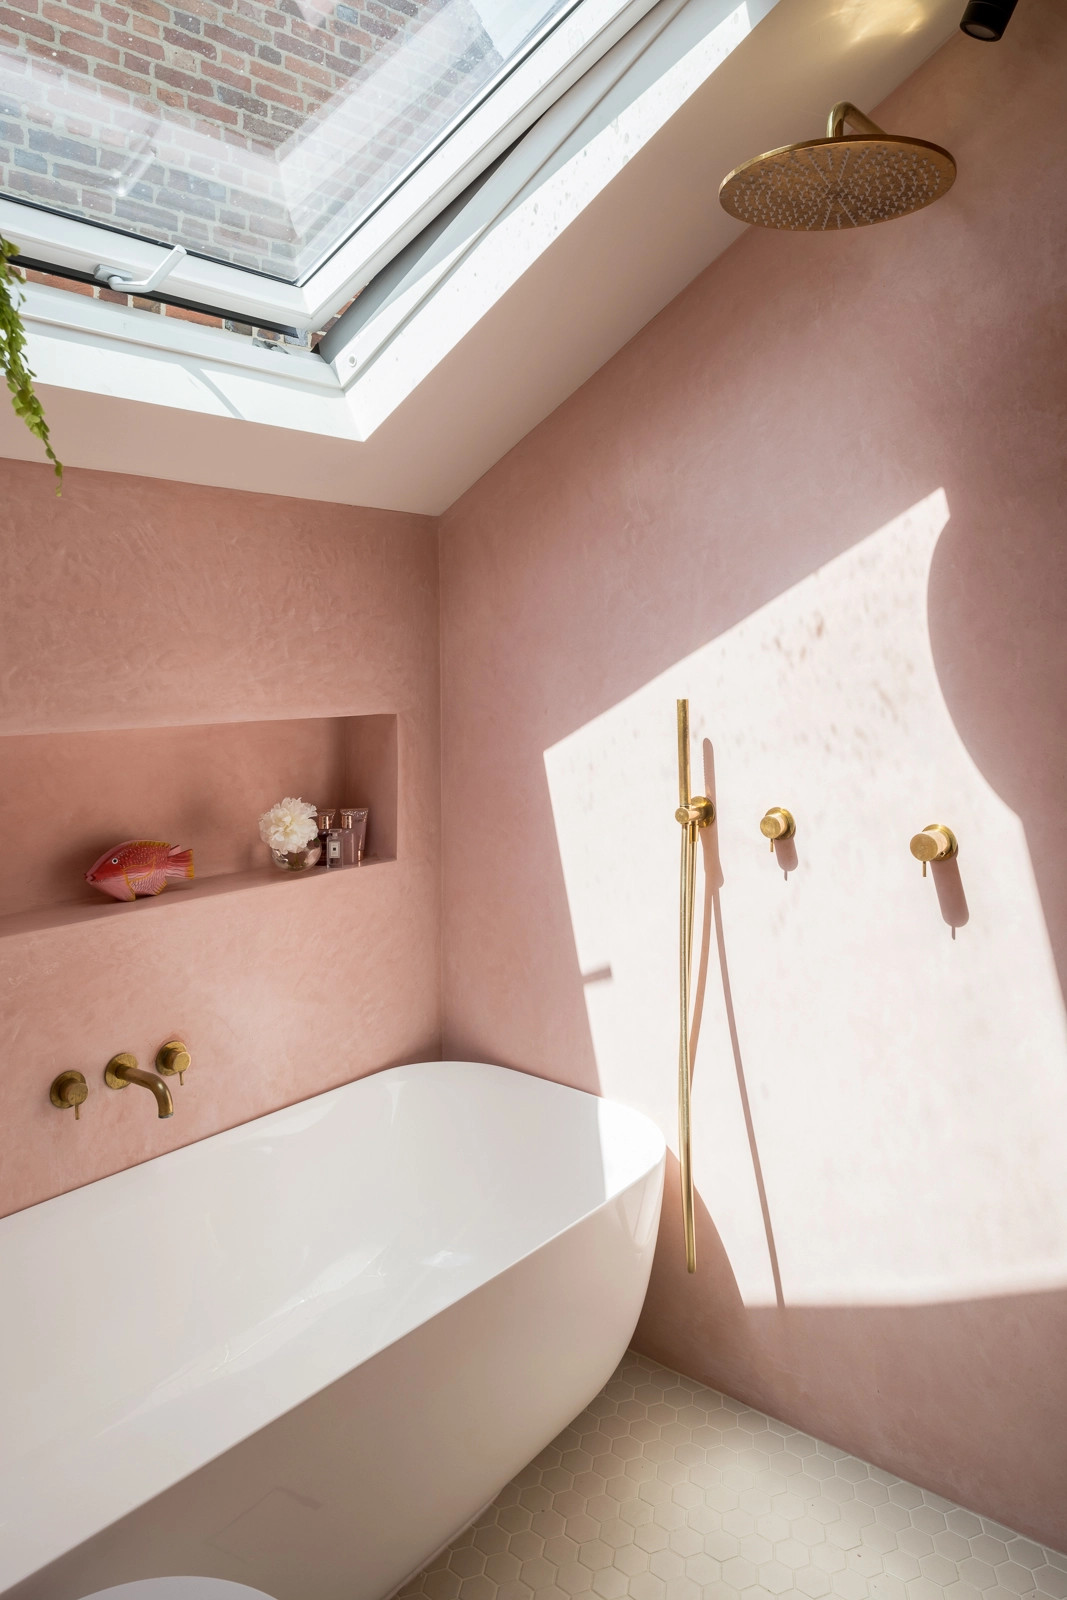 salle de bain rose